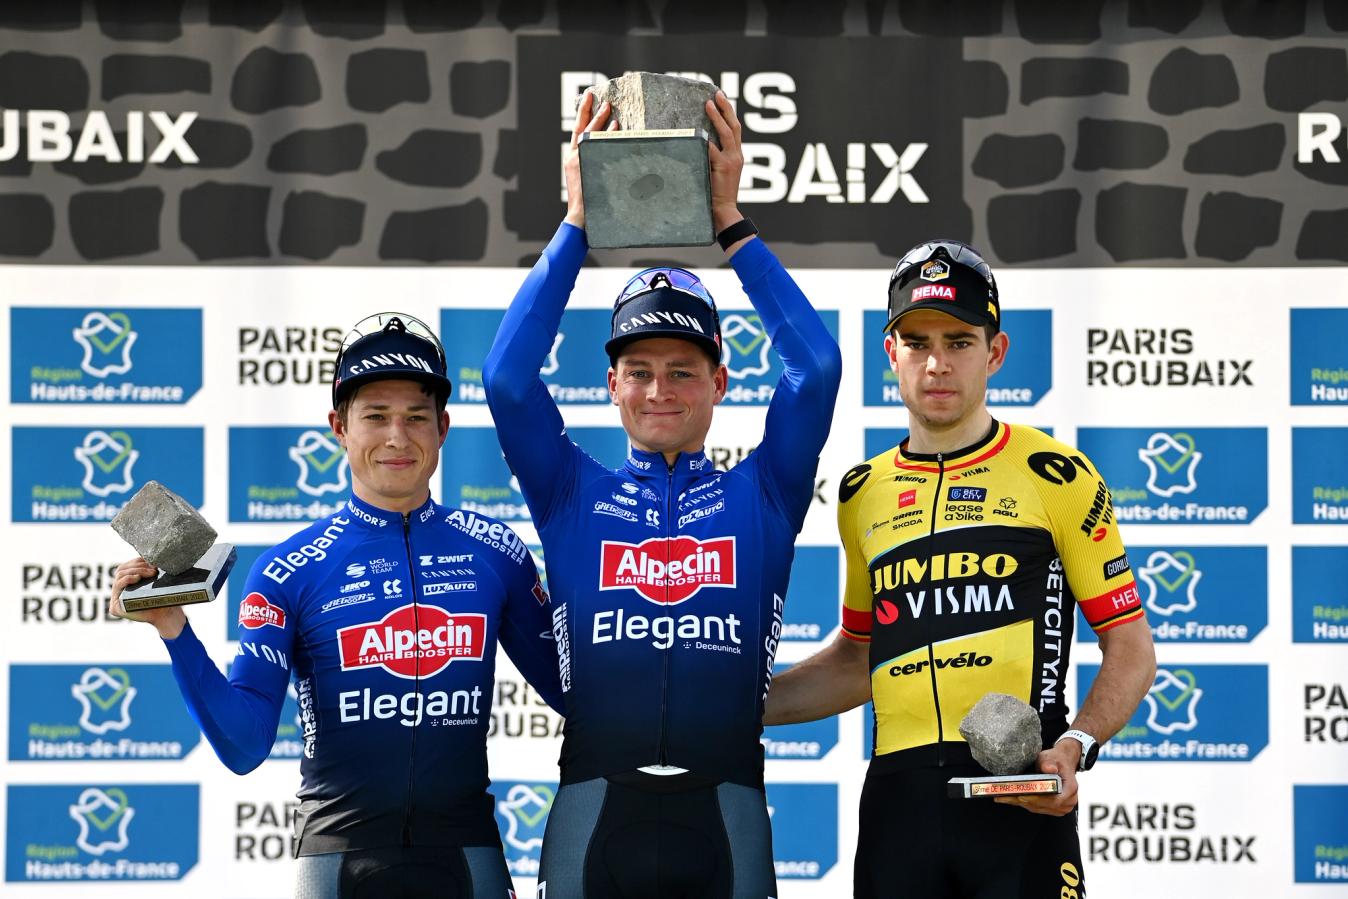 Mathieu van der Poel and Jasper Philipsen both enjoyed the rides of their lives at Paris-Roubaix